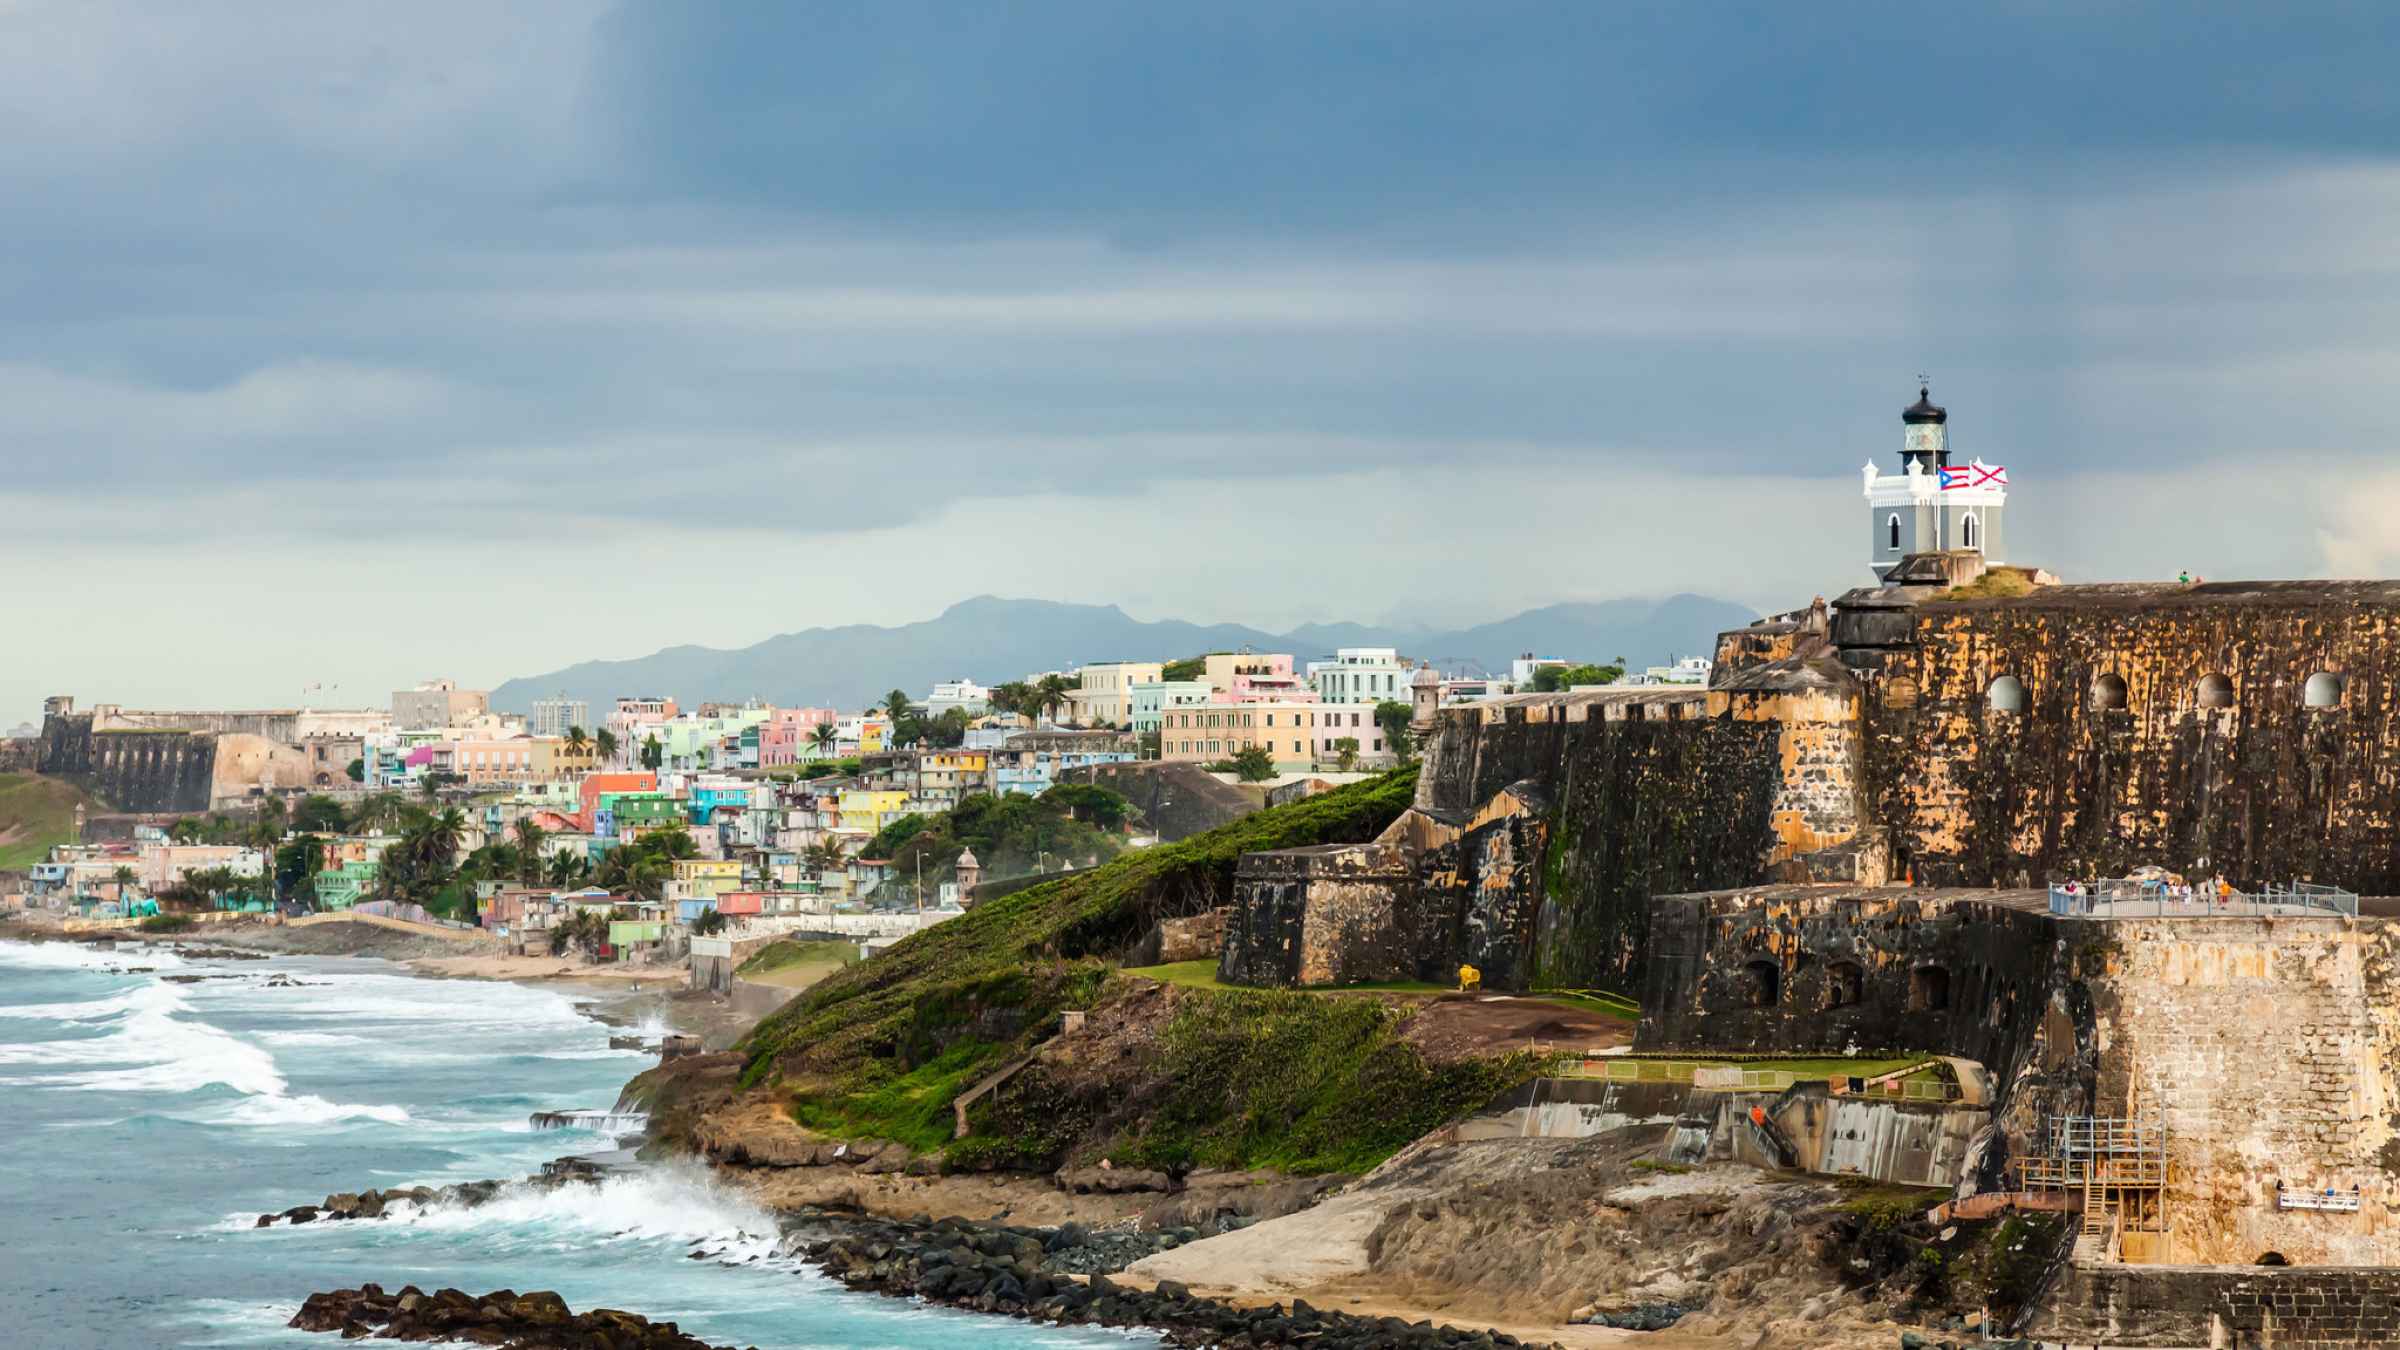 San Juan 2021 Top 10 Tours And Activities With Photos Things To Do